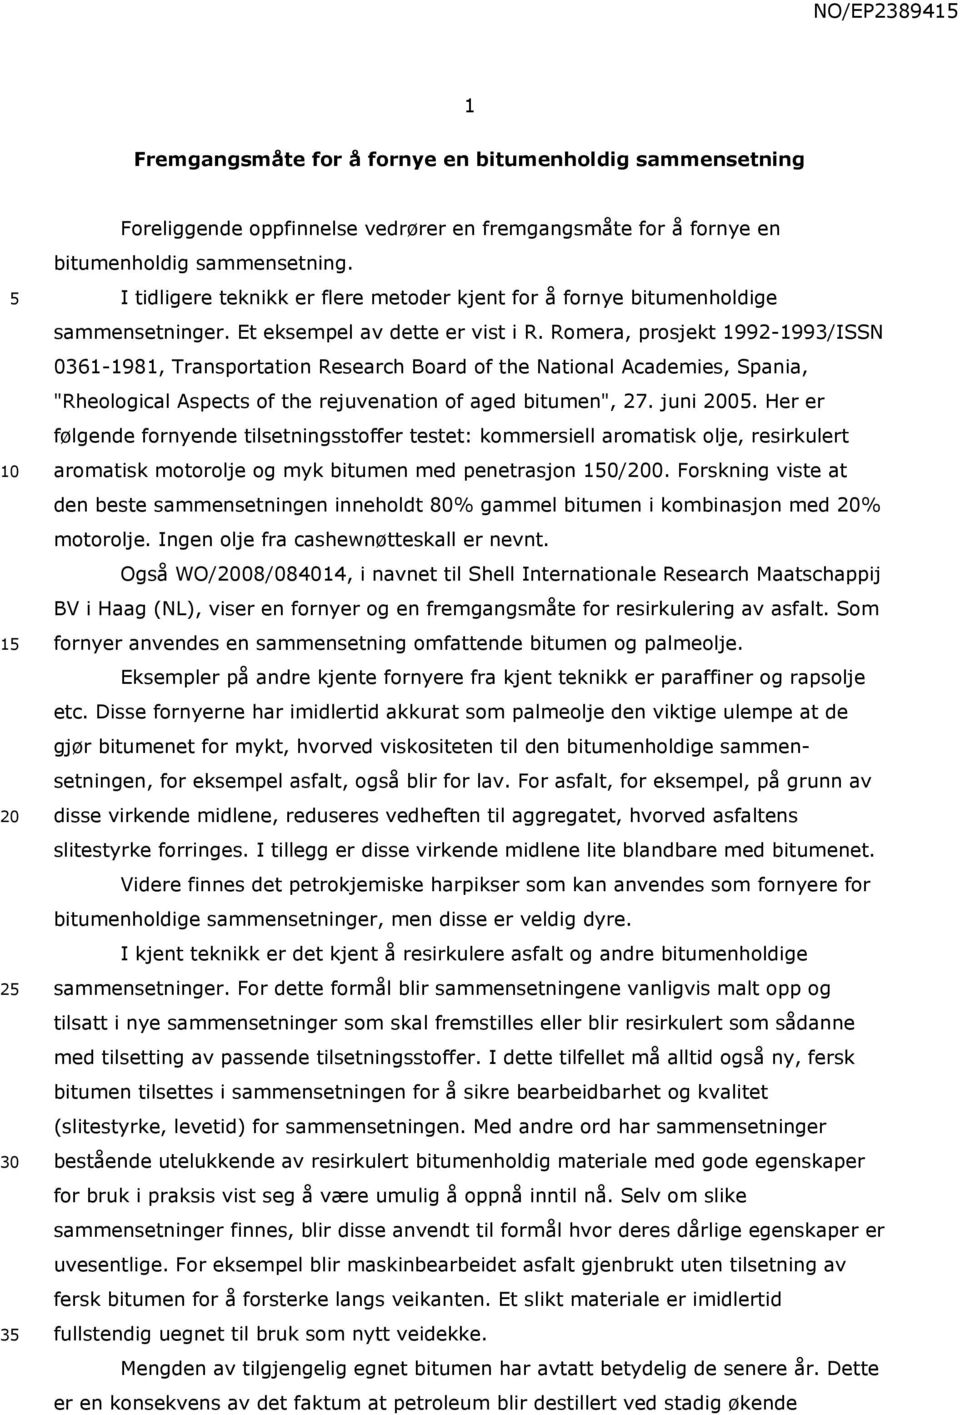 Romera, prosjek 1992-1993/ISSN 0361-1981, Trasporaio Research Board of he Naioal Academies, Spaia, "Rheological Aspecs of he rejuveaio of aged biume", 27. jui 200.